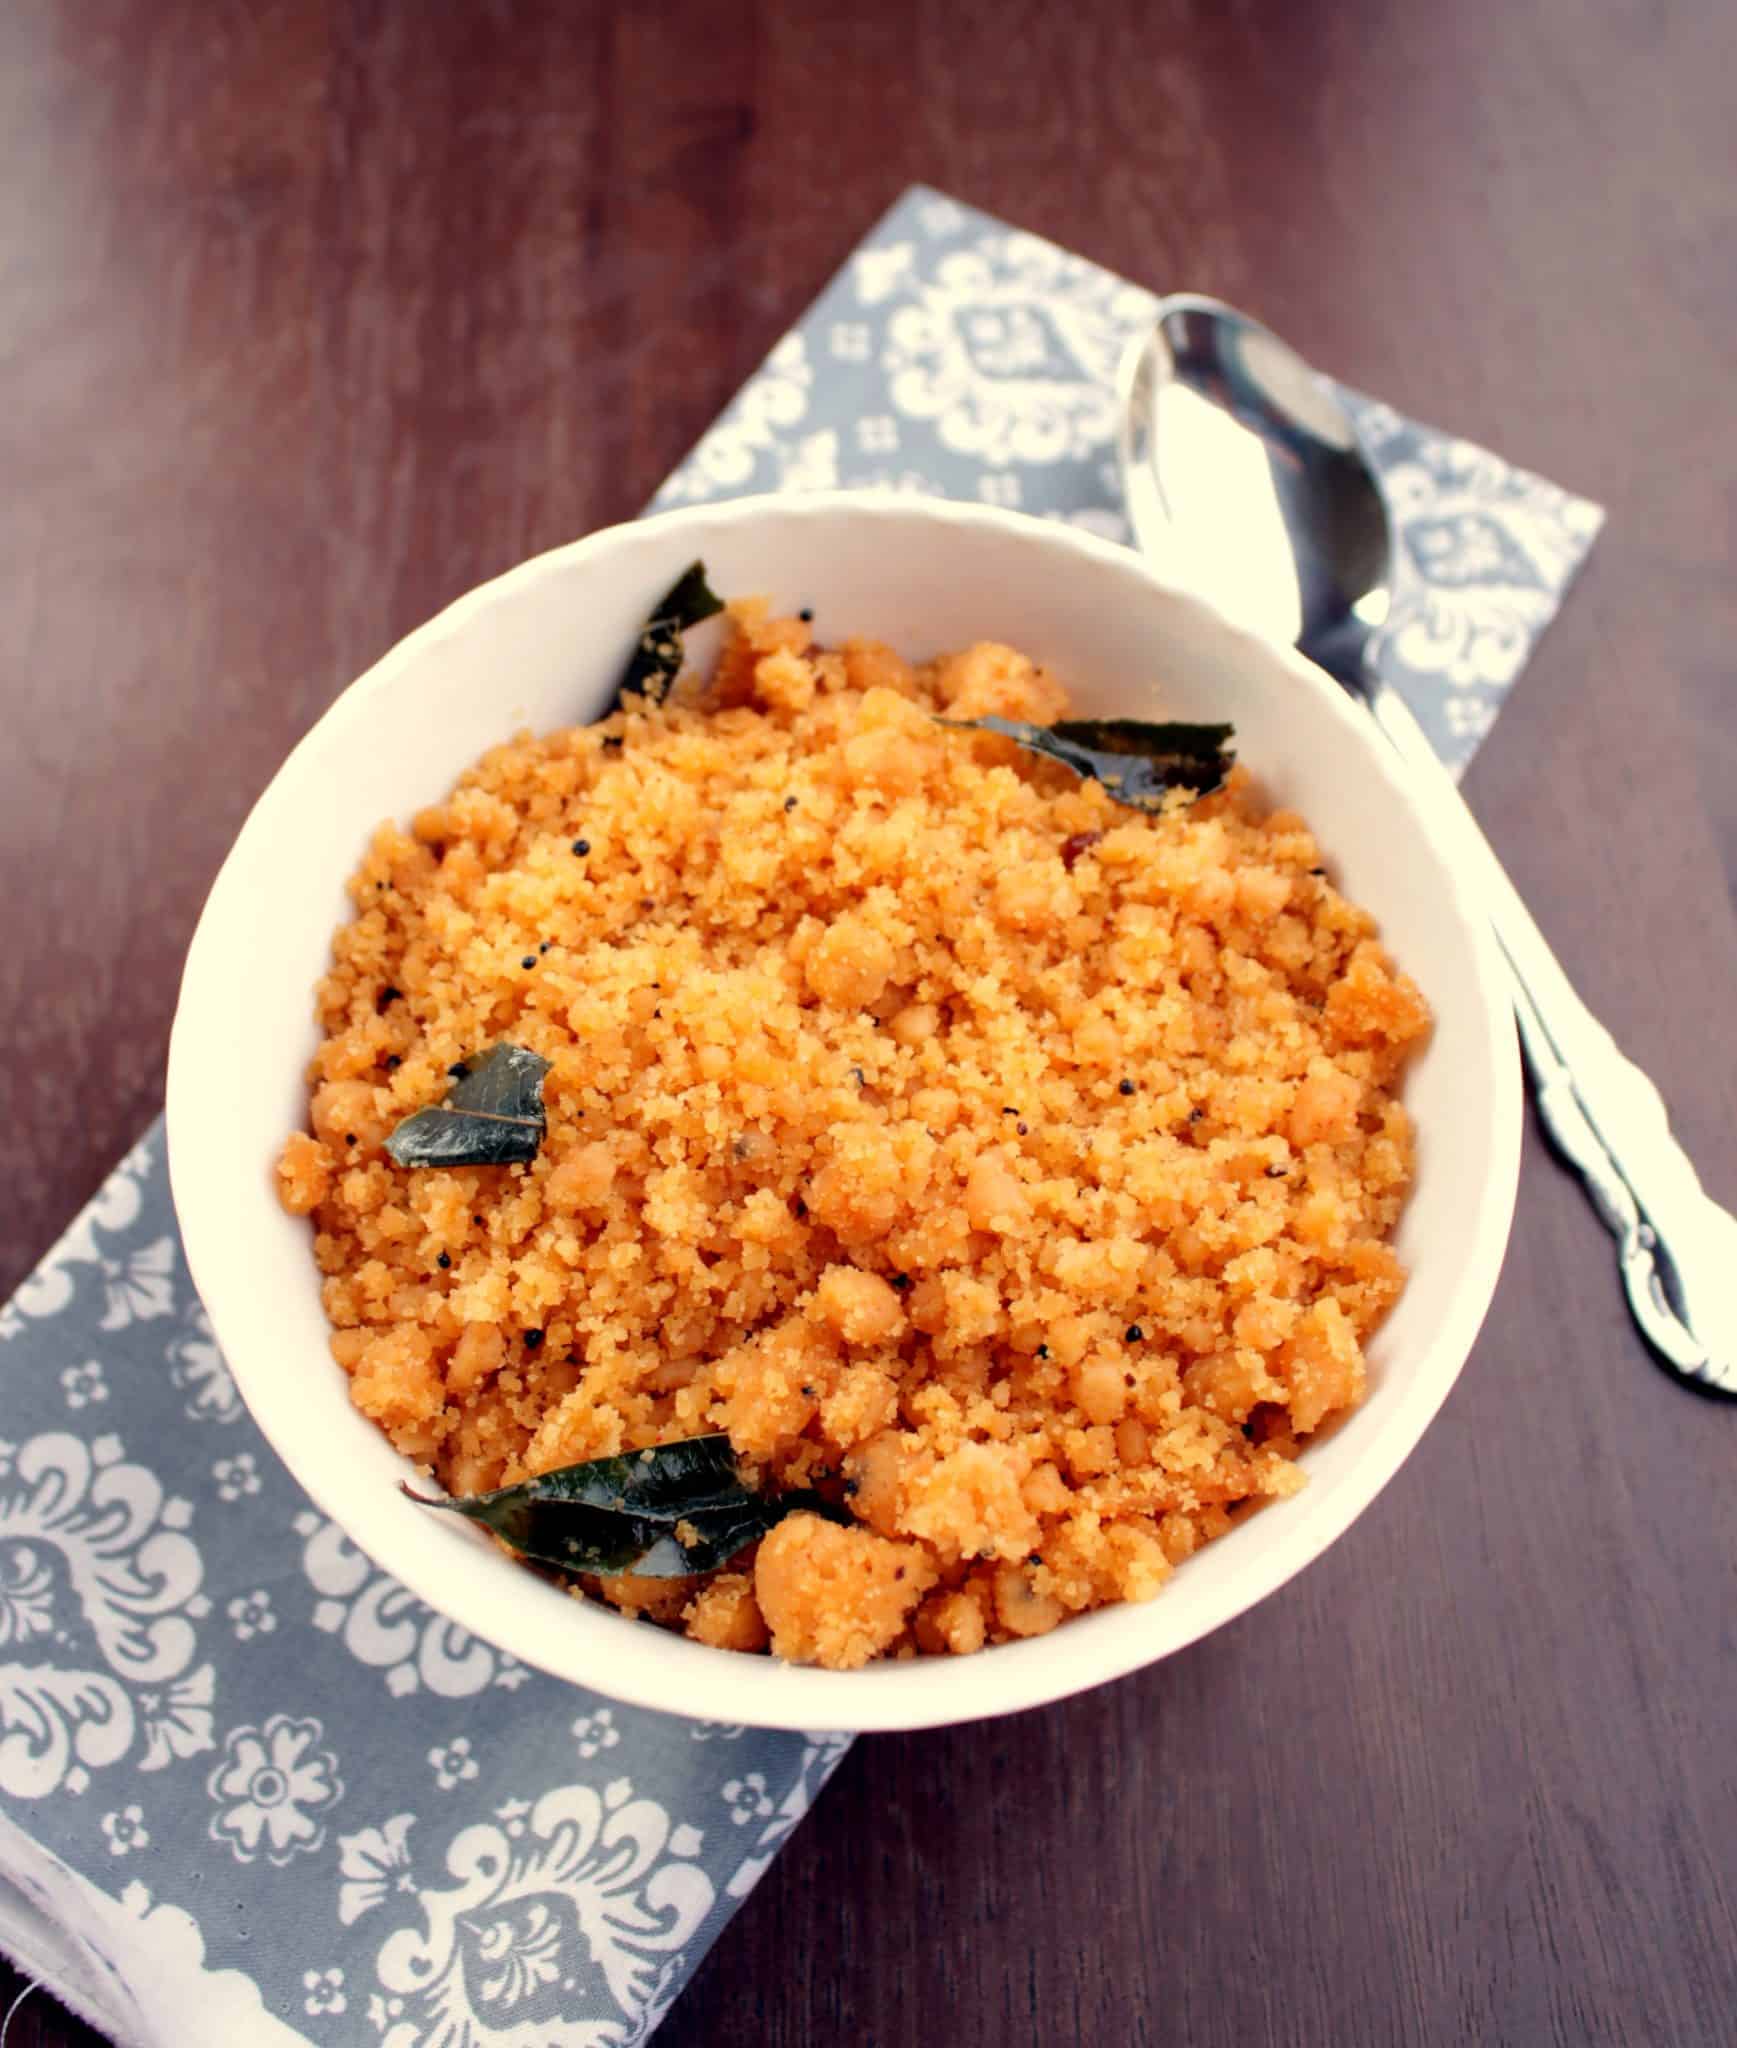 Kozhama Upma - Rice Flour Upma with Tamarind in a Bowl